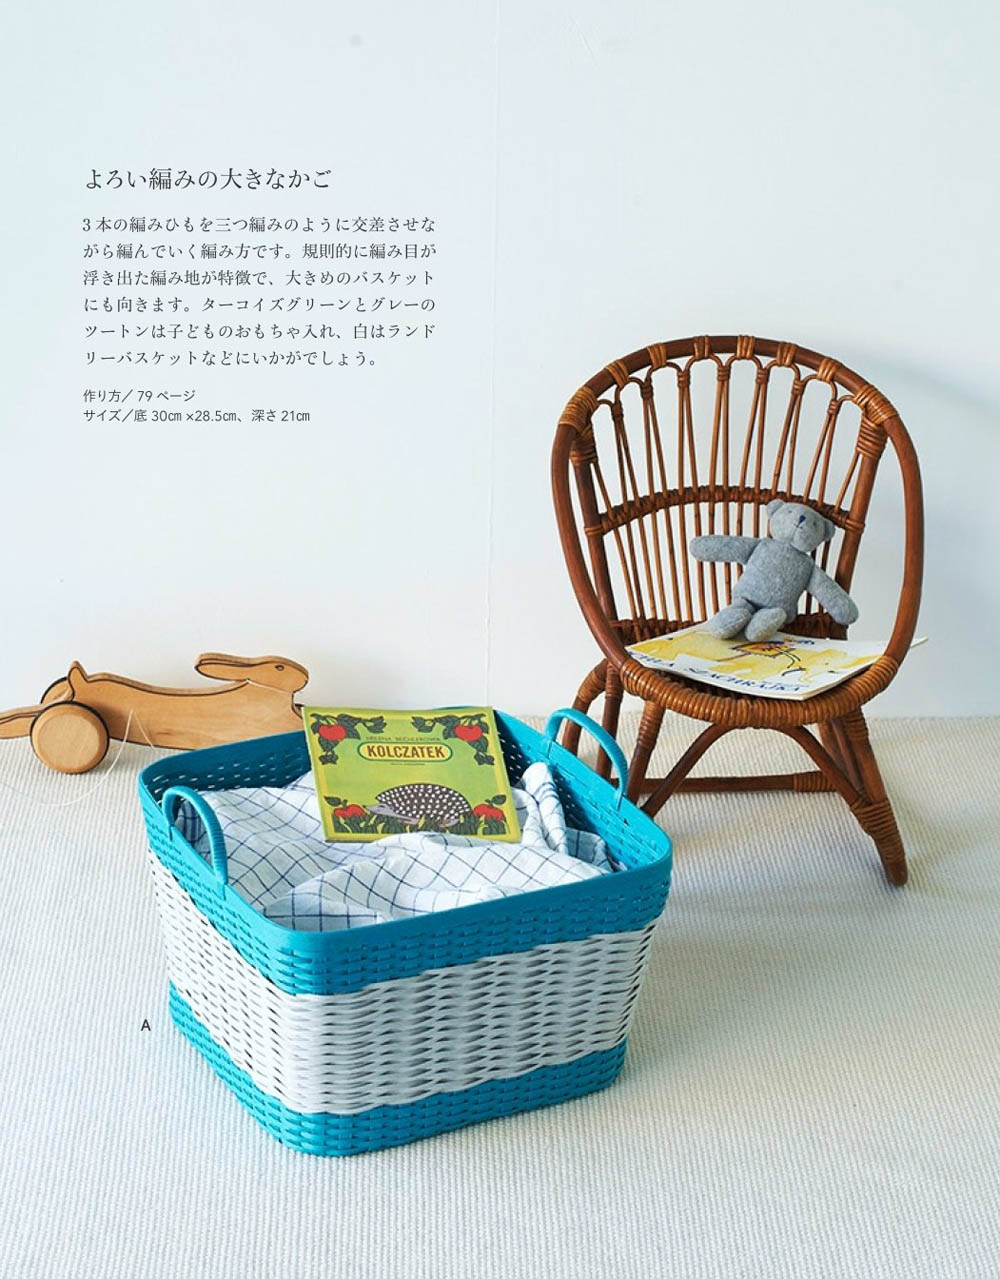 Basket of eco-Craft